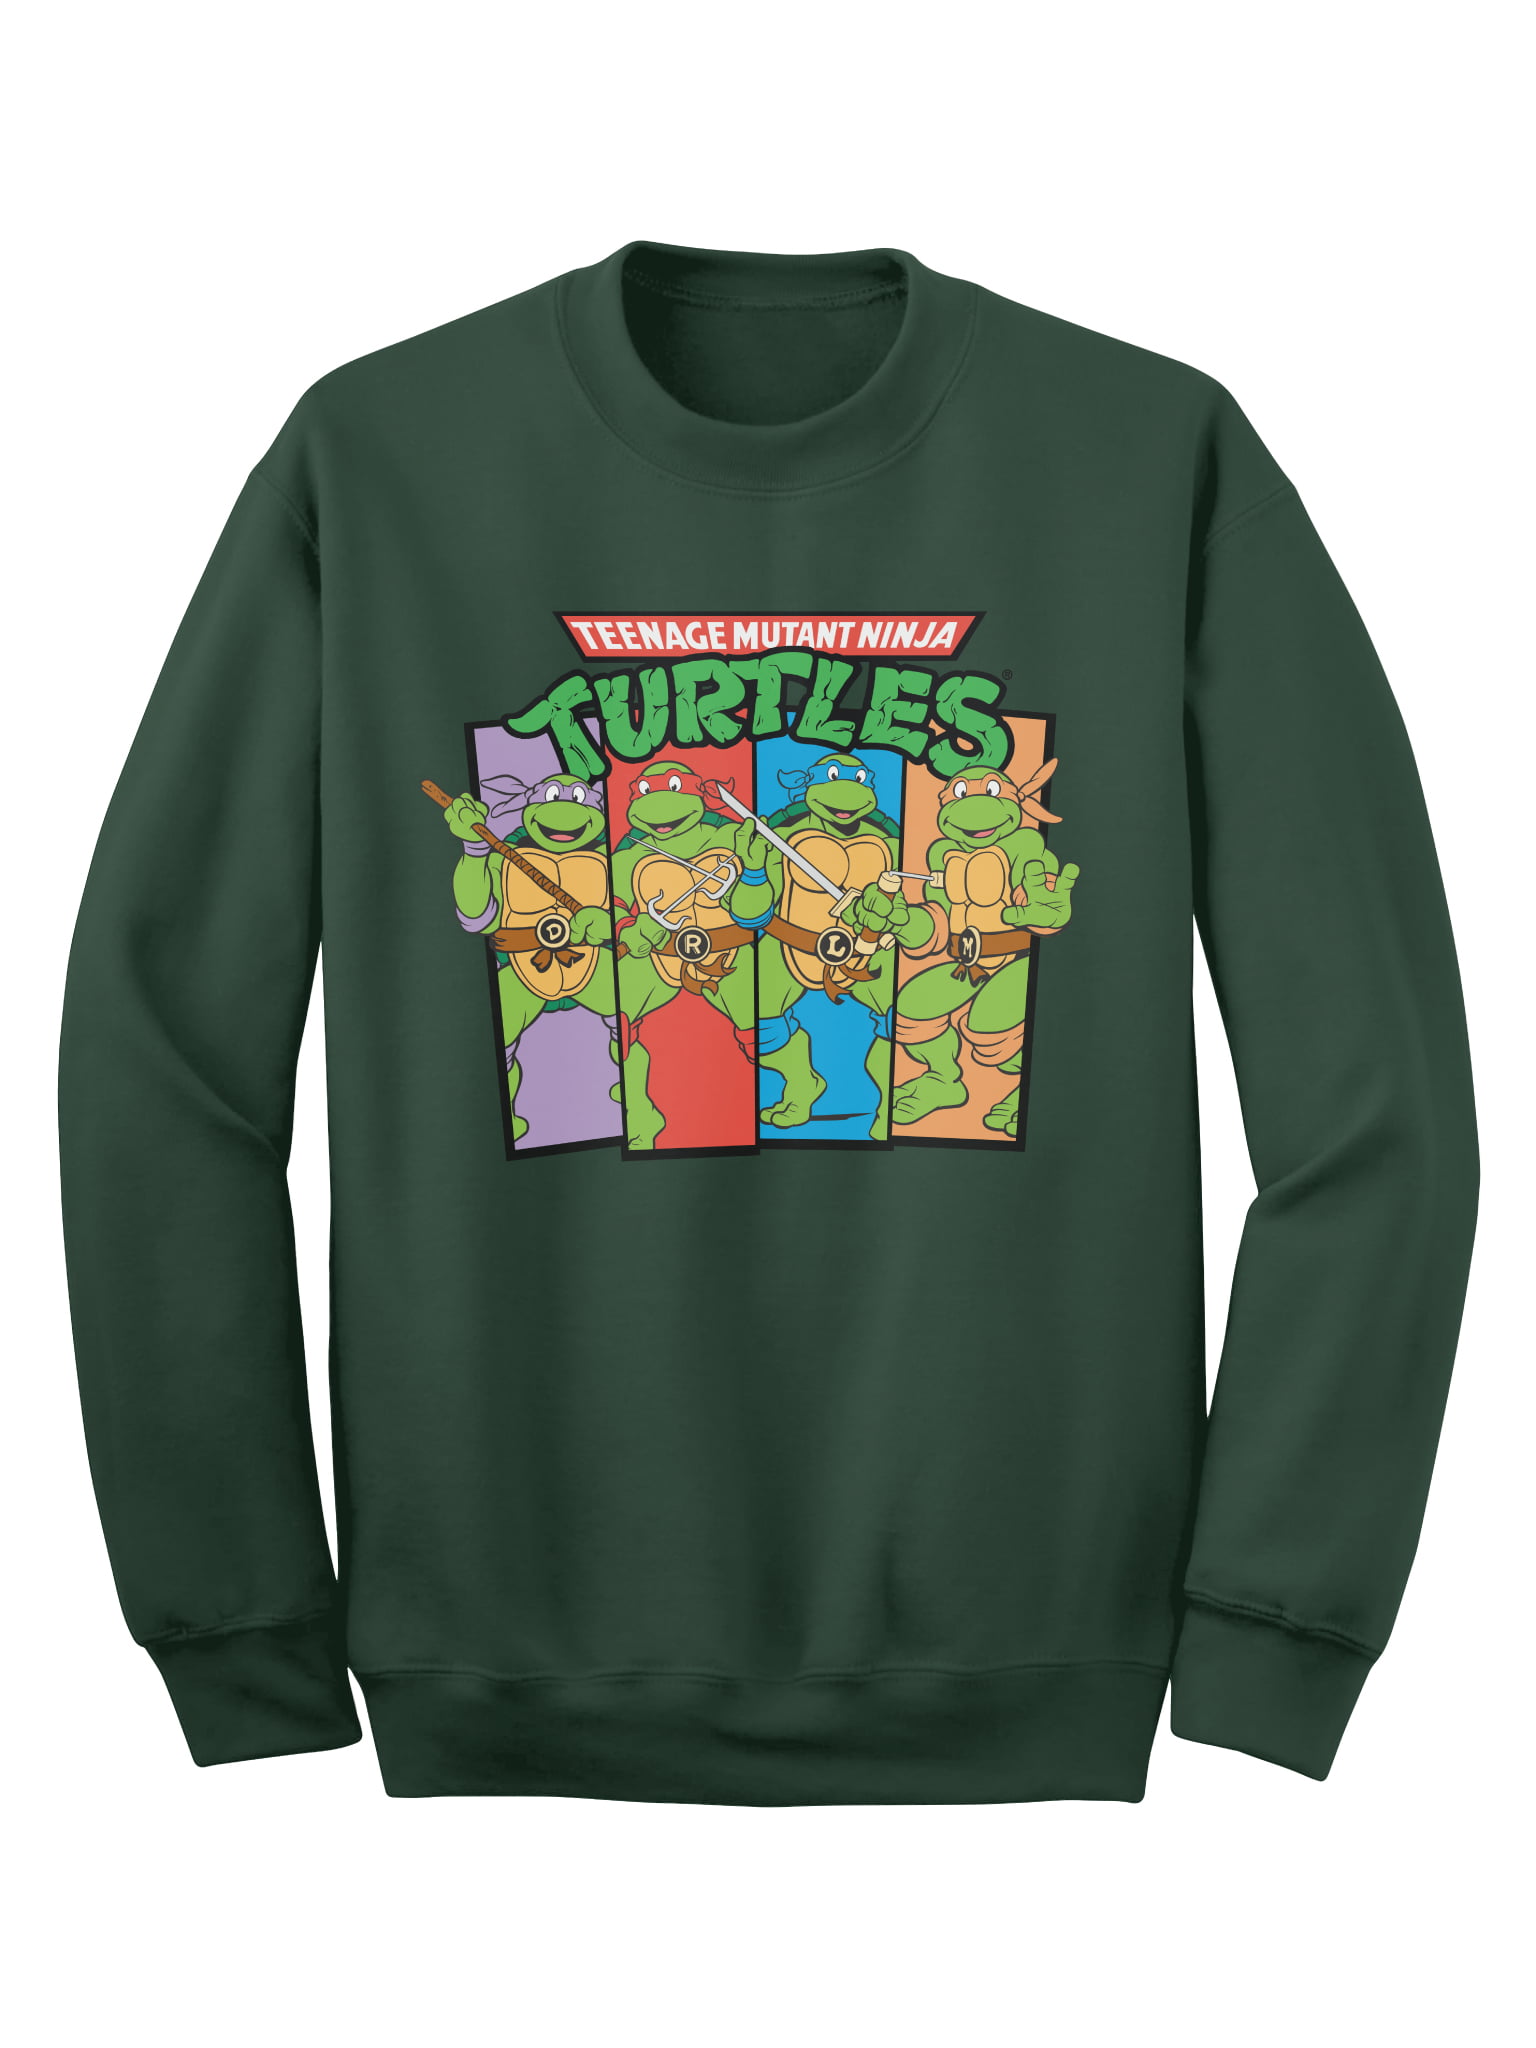 Teenage Mutant Ninja Turtles Cotton Leisure and Comfort Crew Neck Long Sleeve Graphic T-Shirt for Boys Girls